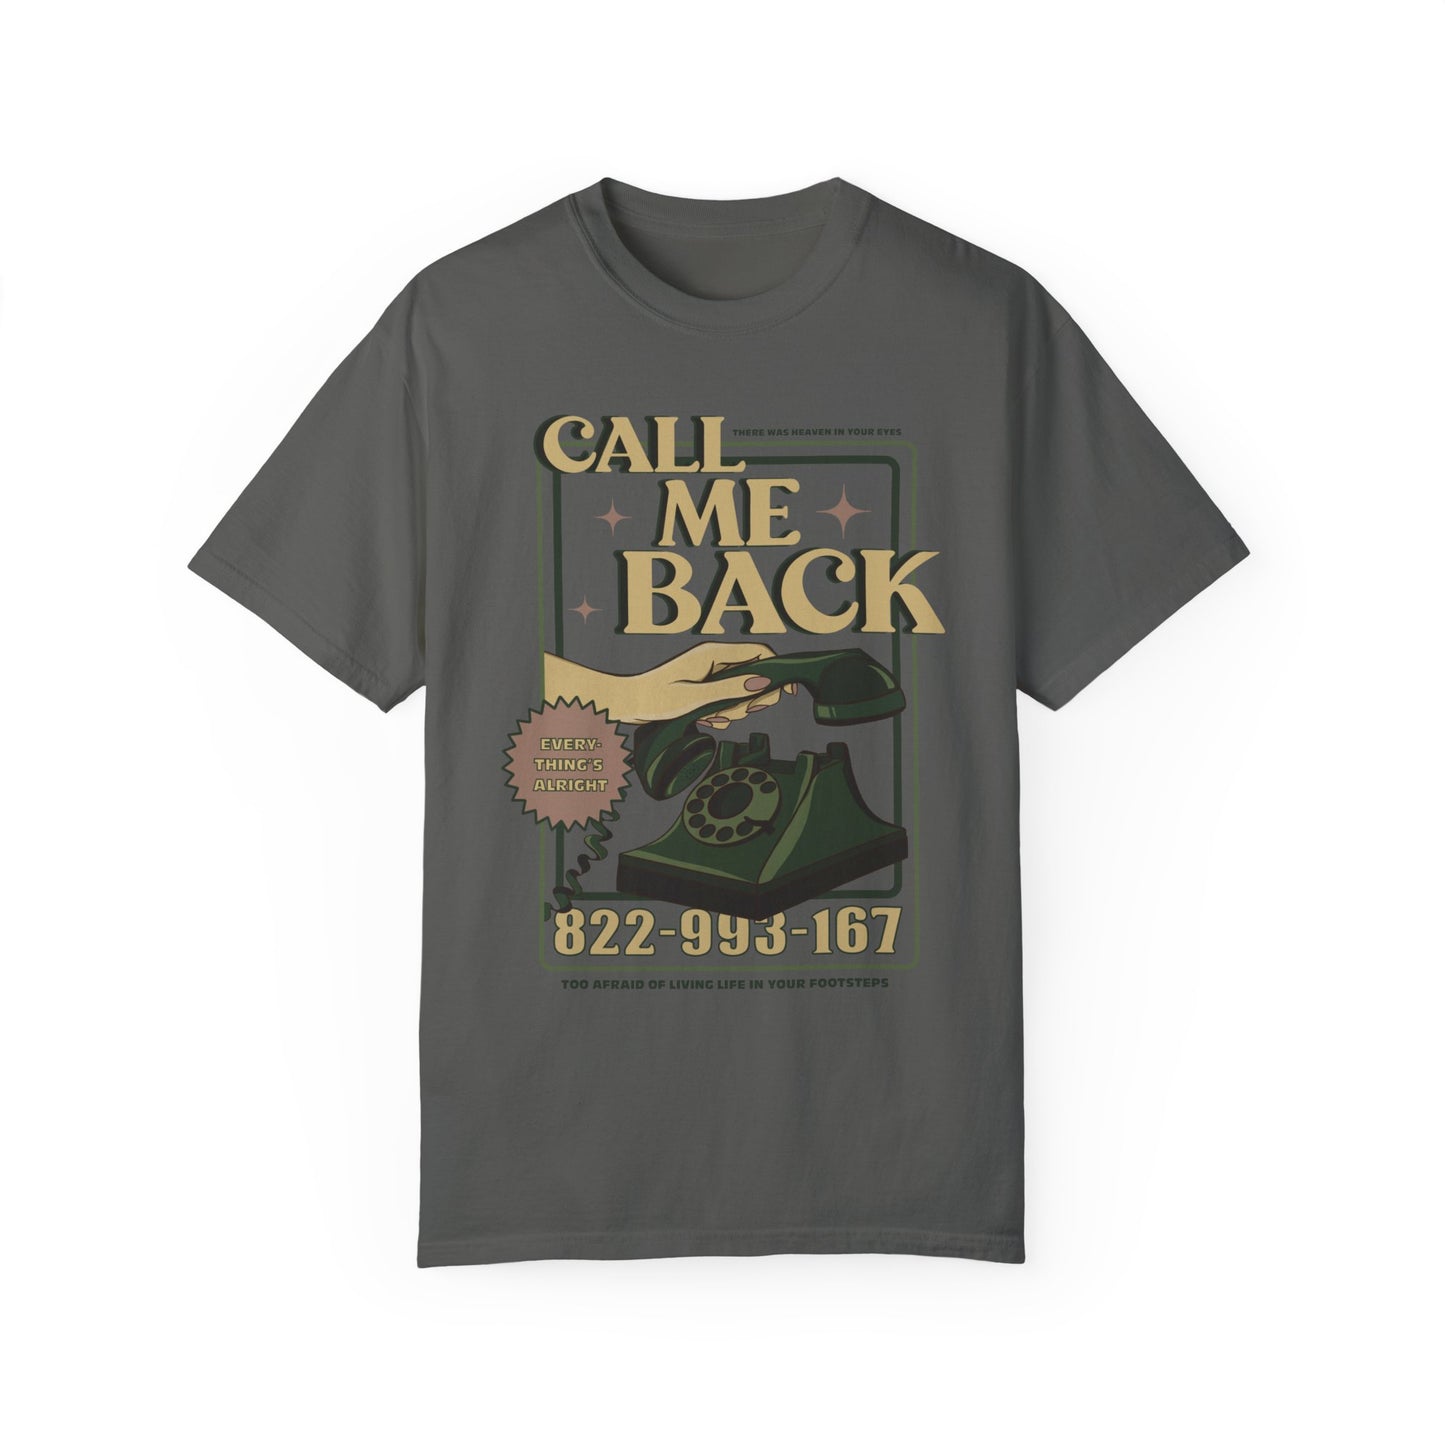 Call Me Back! Graphic Tee